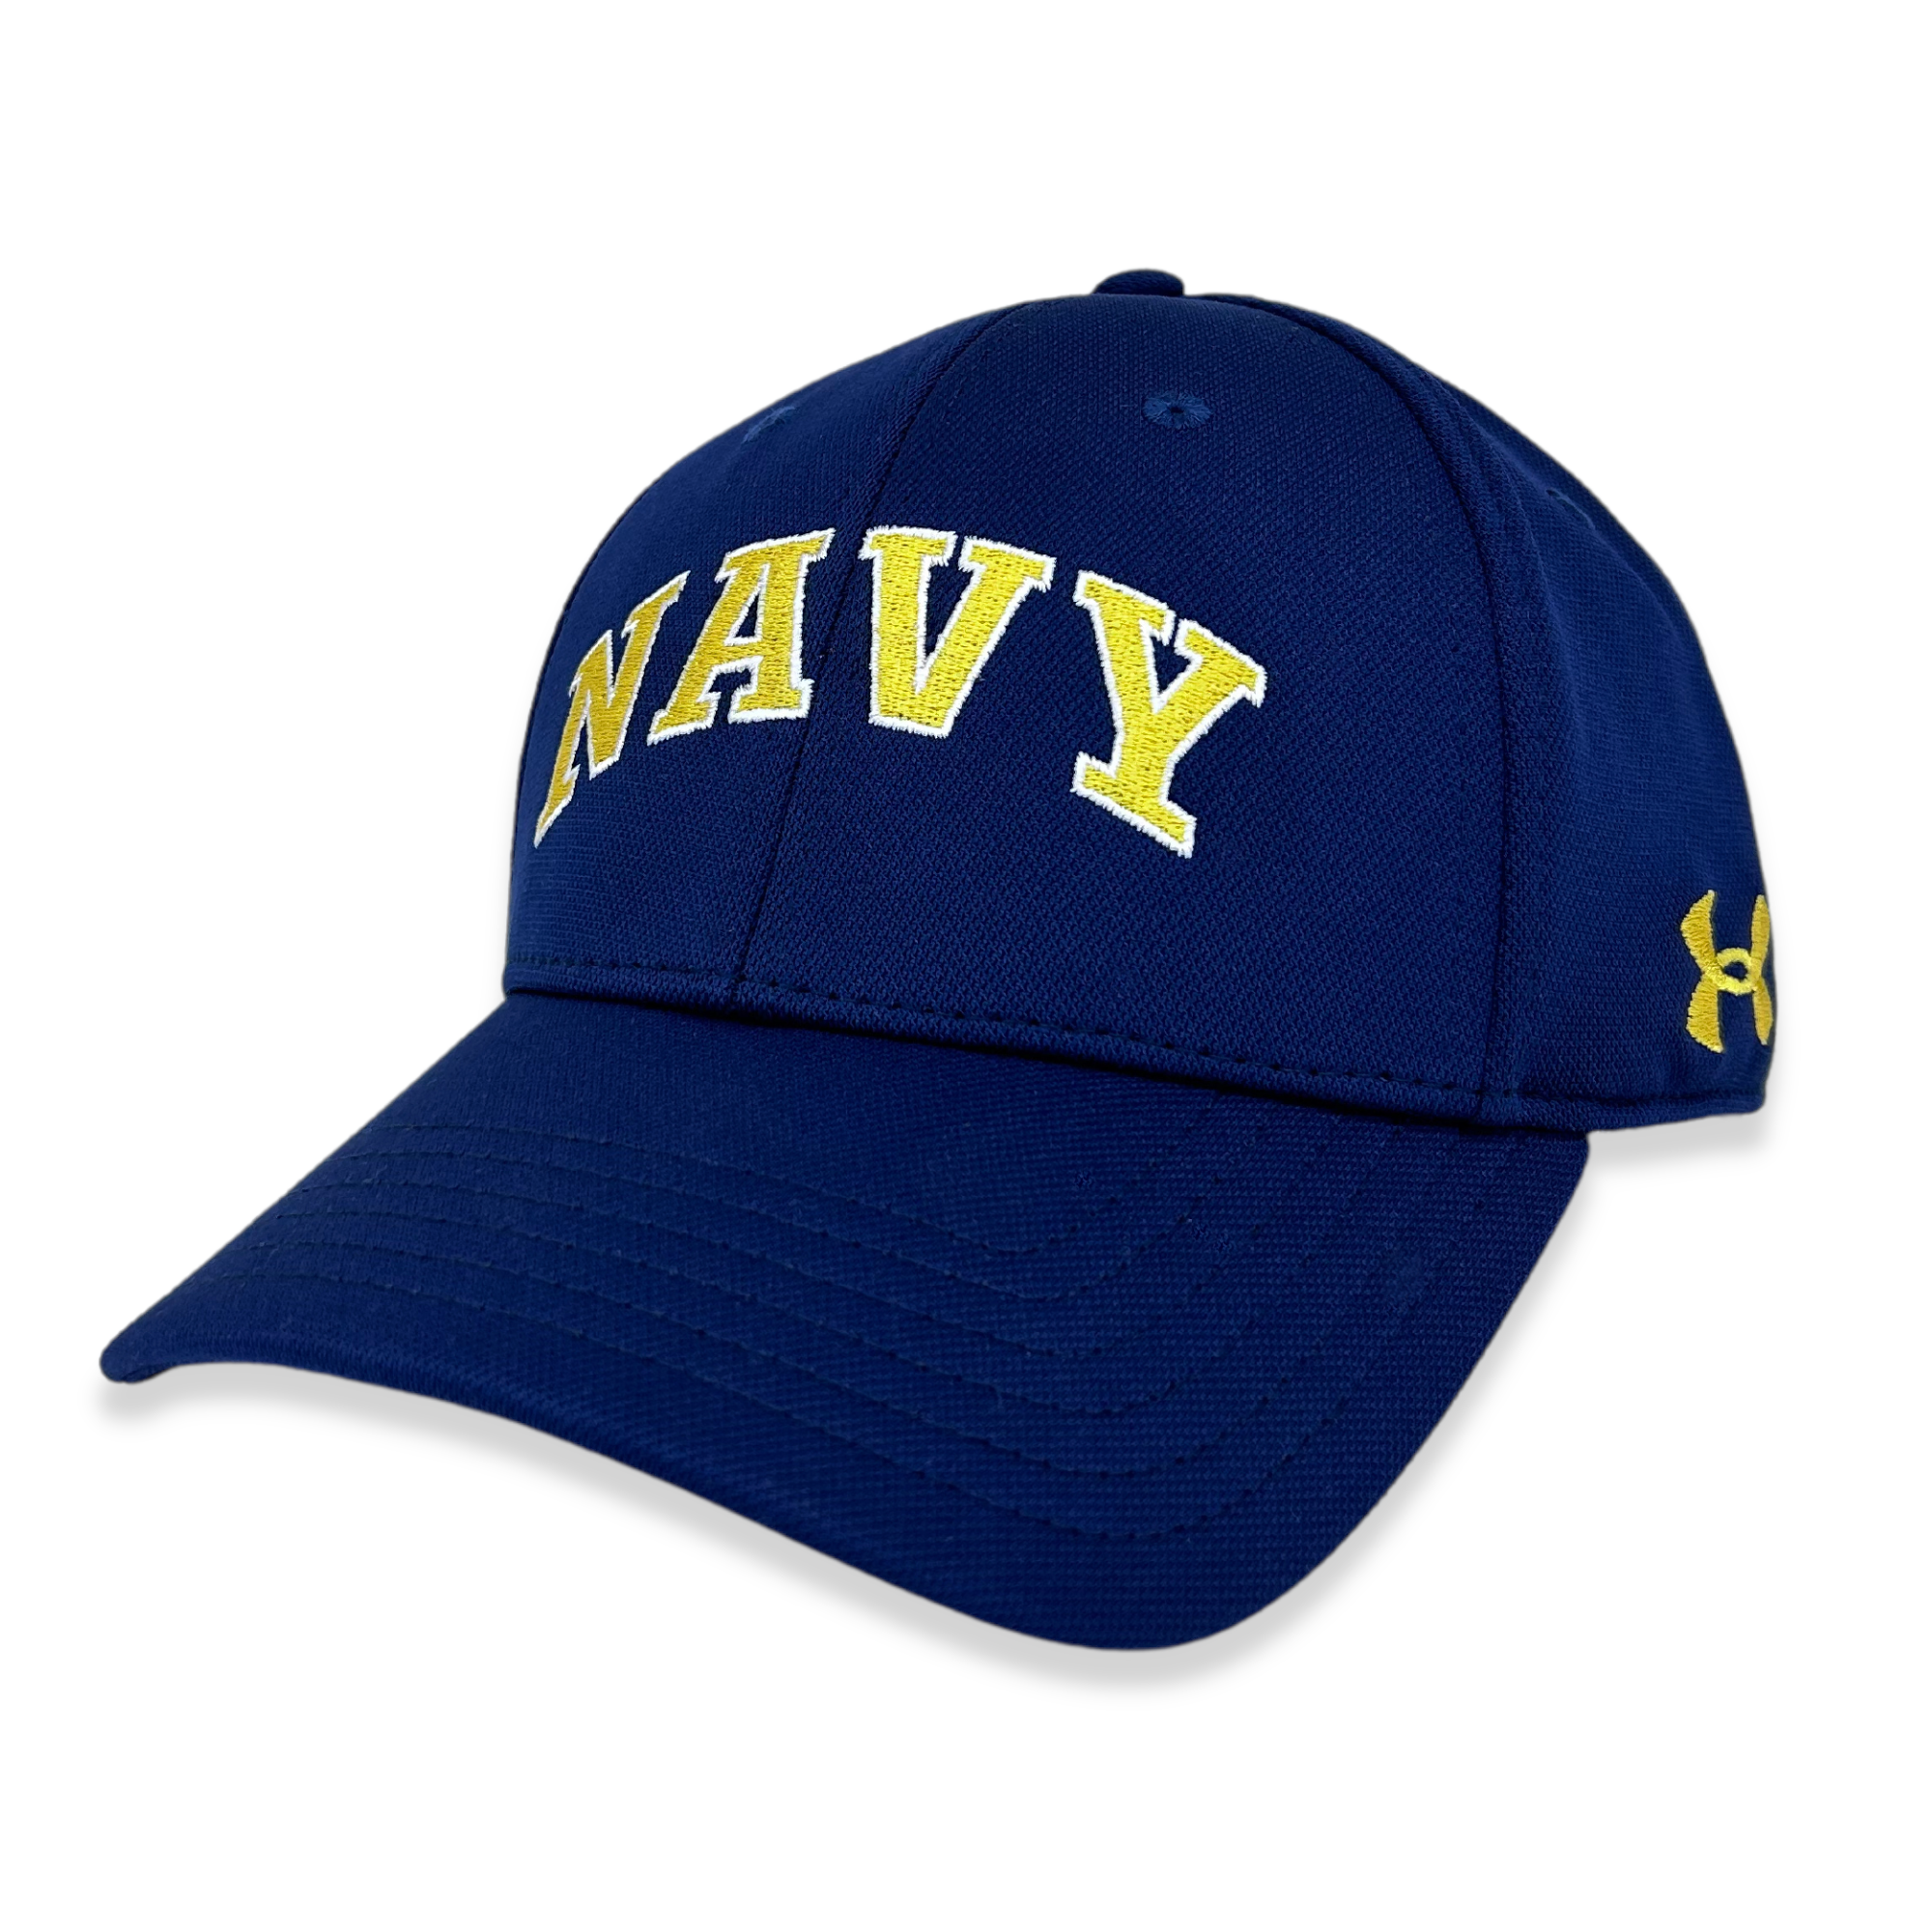 Navy Hat (Navy) Armour Flex Fit Under Blitzing